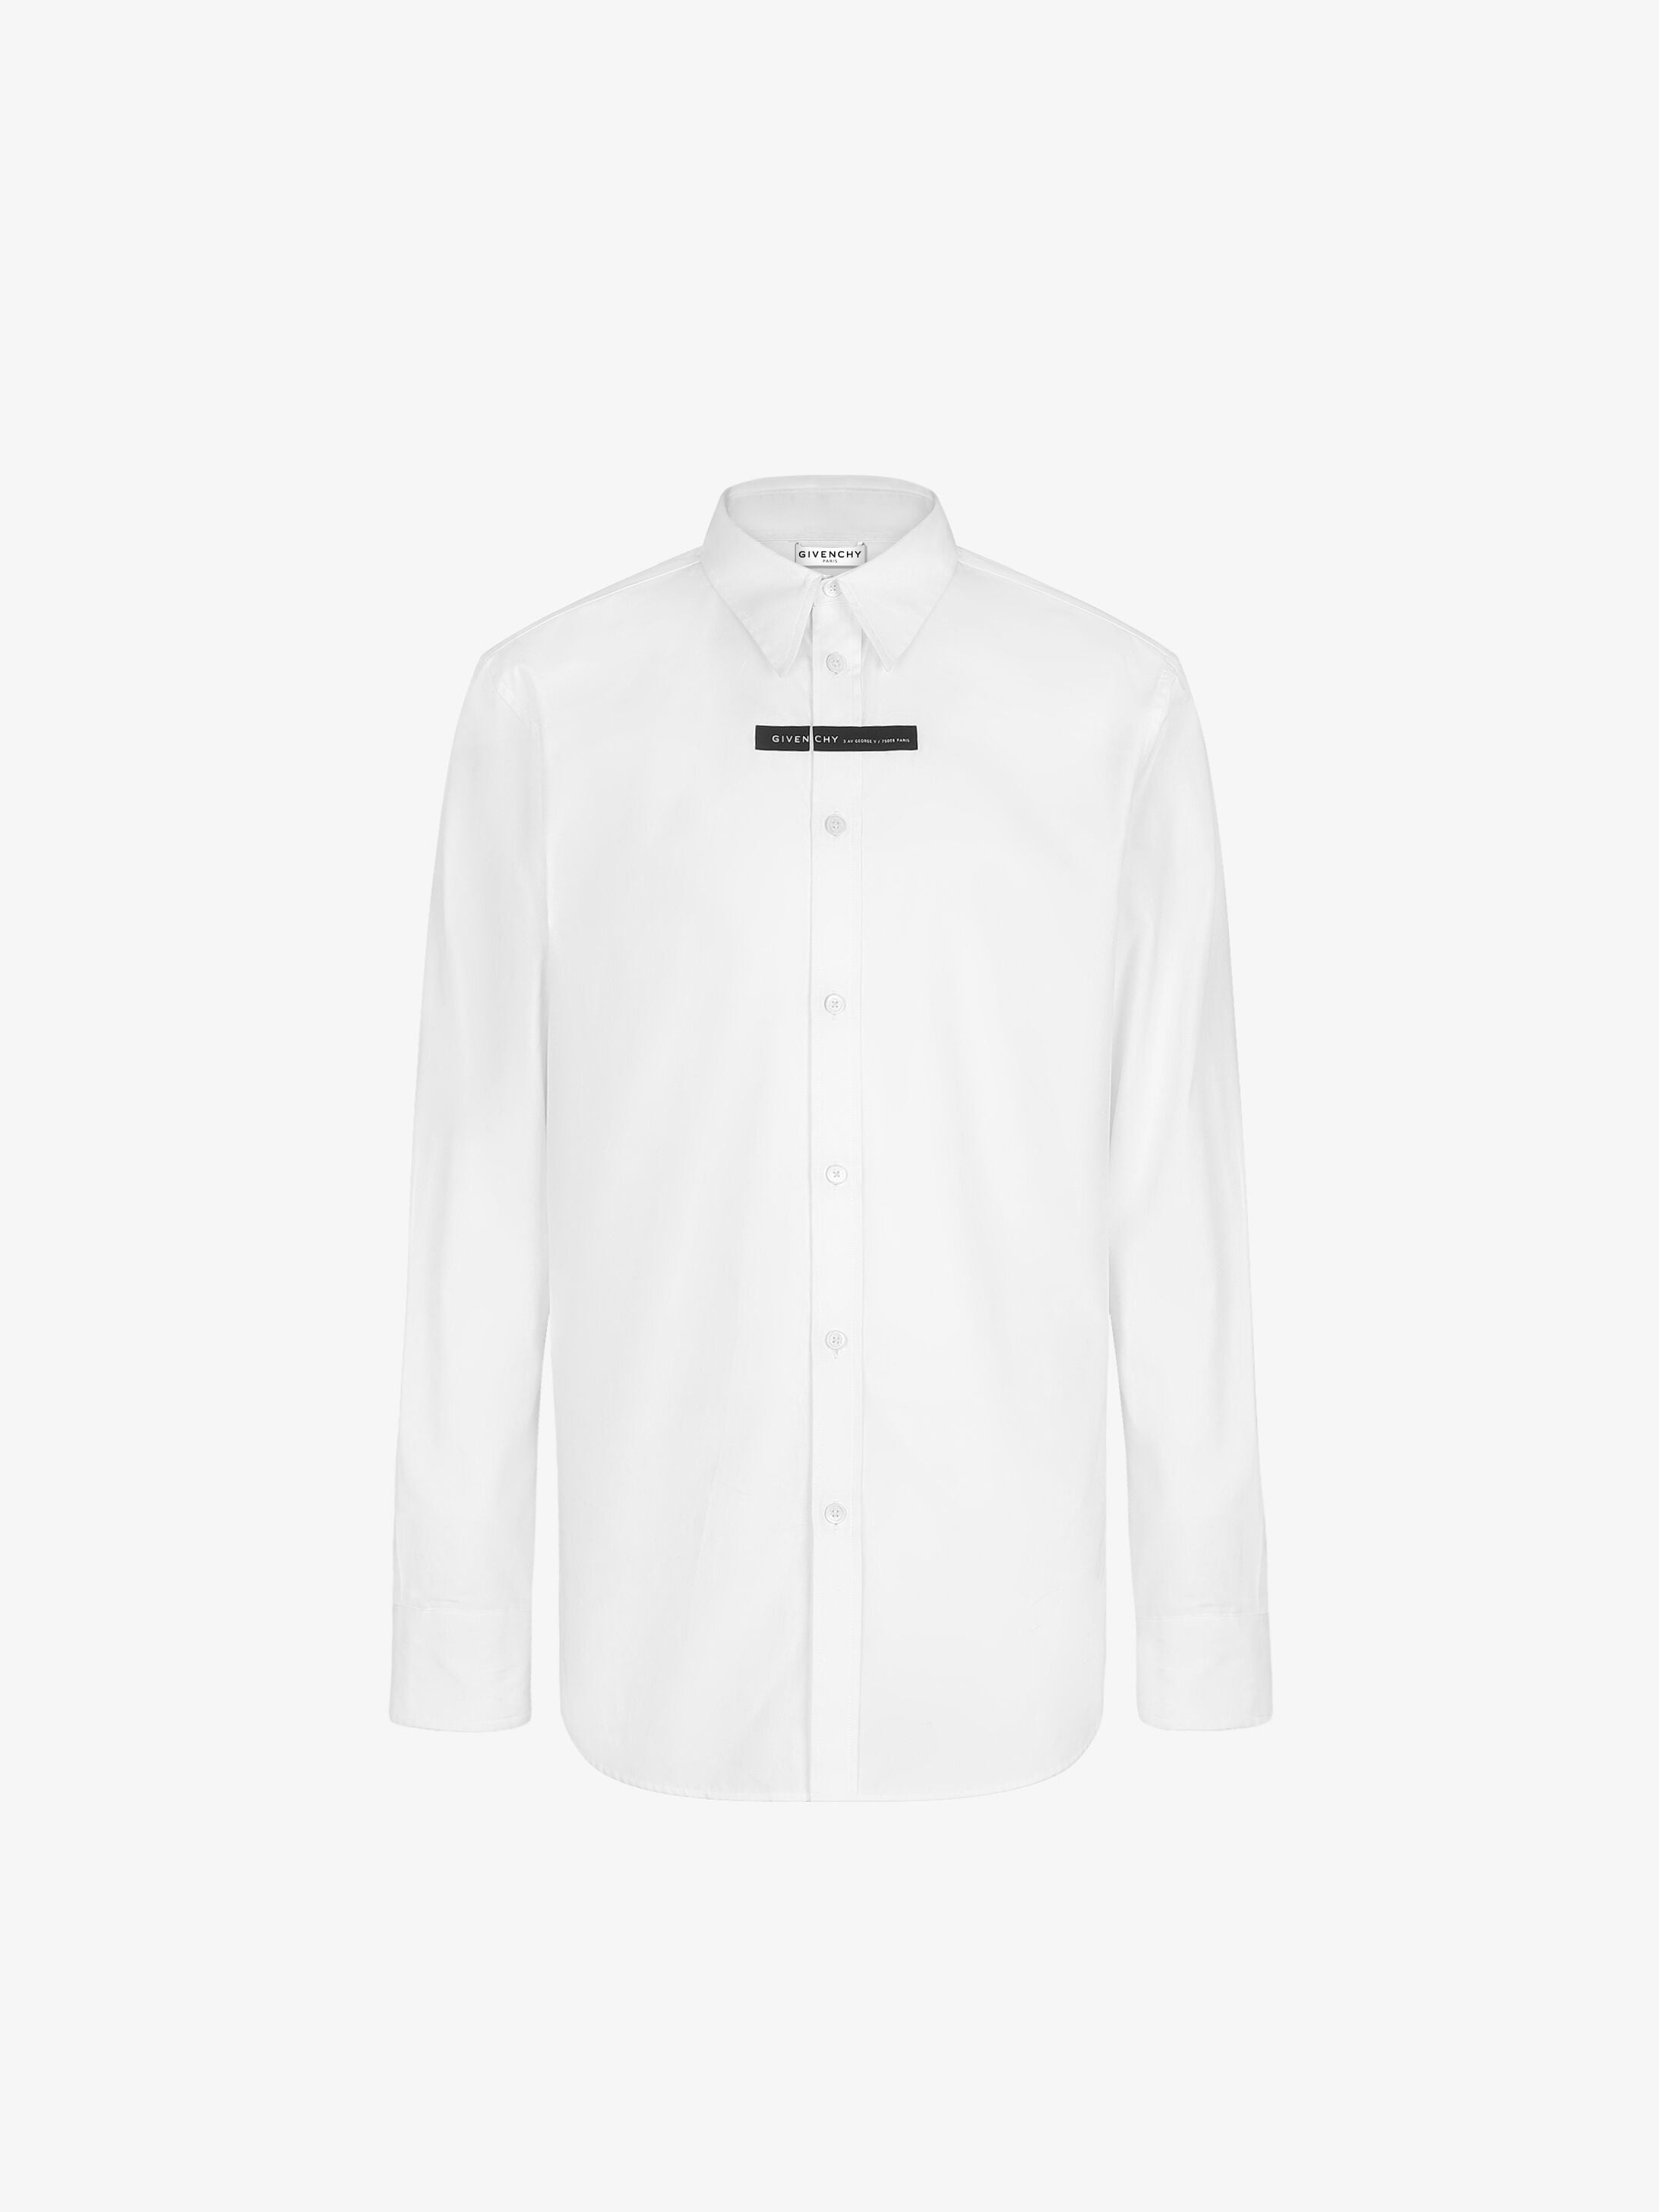 givenchy white shirt